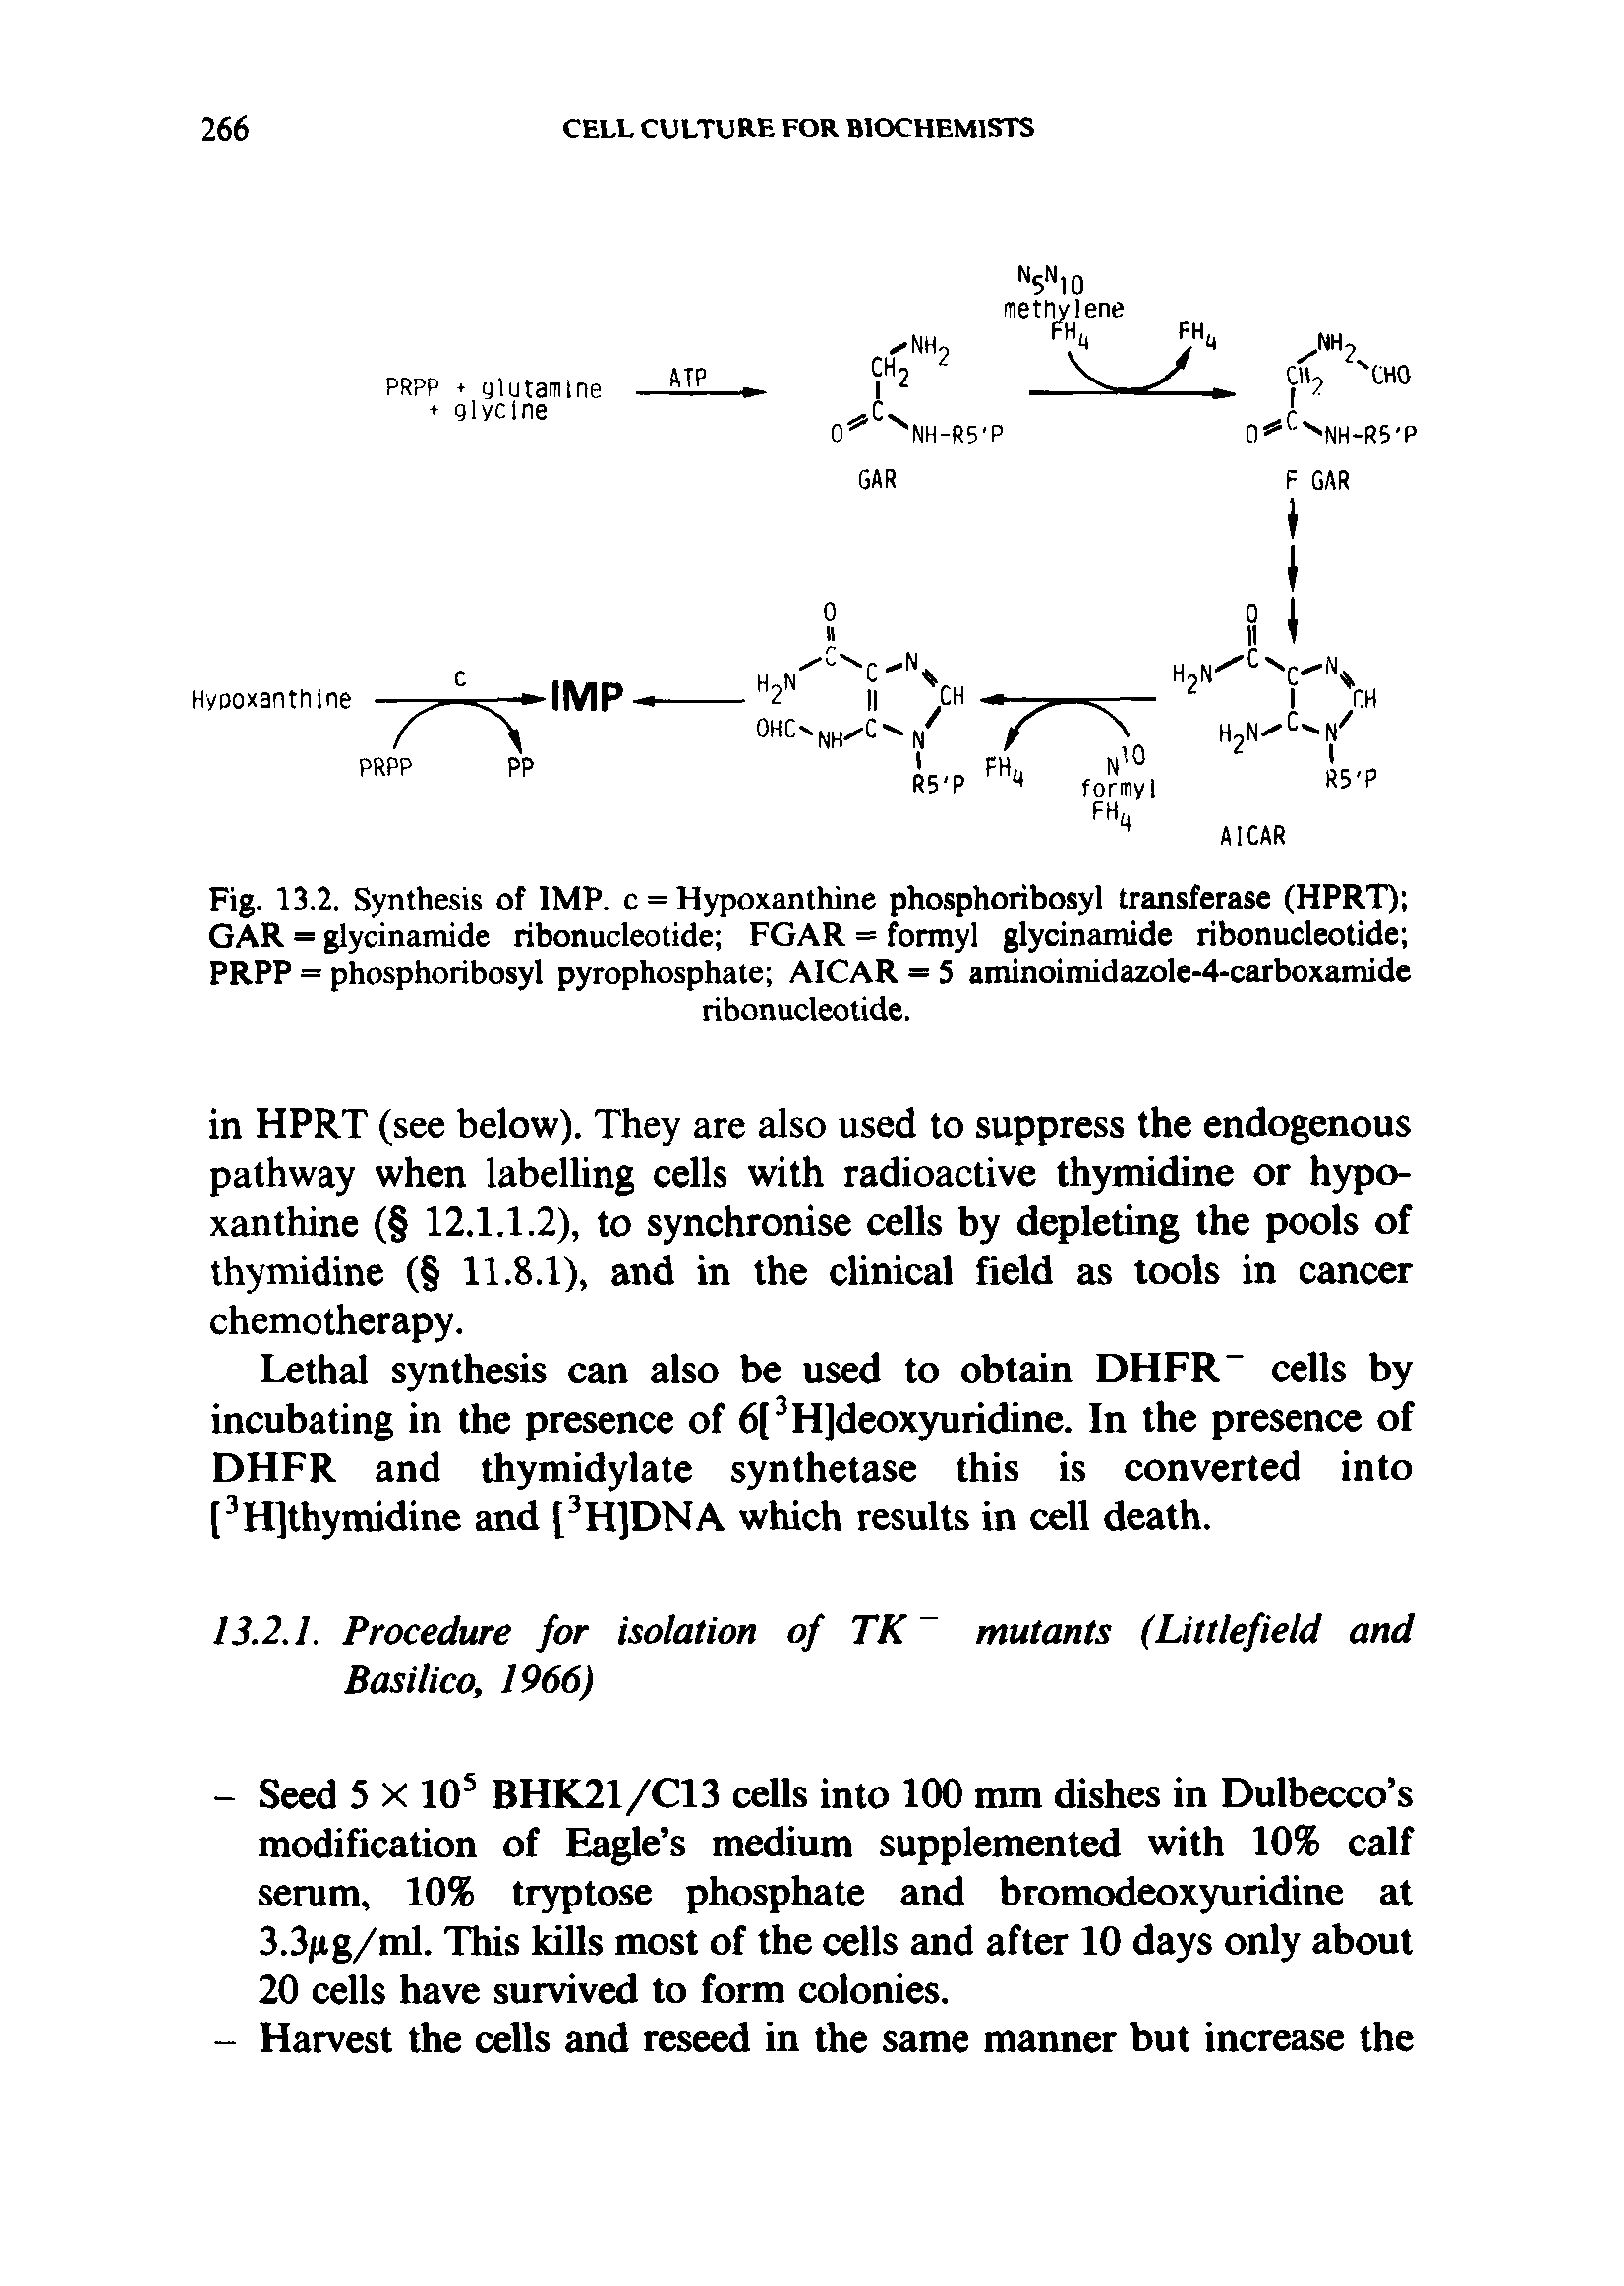 Fig. 13.2. Synthesis of IMP. c = Hypoxanthine phosphoribosyl transferase (HPRT) GAR = glycinamide ribonucleotide FGAR = formyl glycinamide ribonucleotide PRPP = phosphoribosyl pyrophosphate AICAR = 5 aminoimidazole-4-carboxamide...